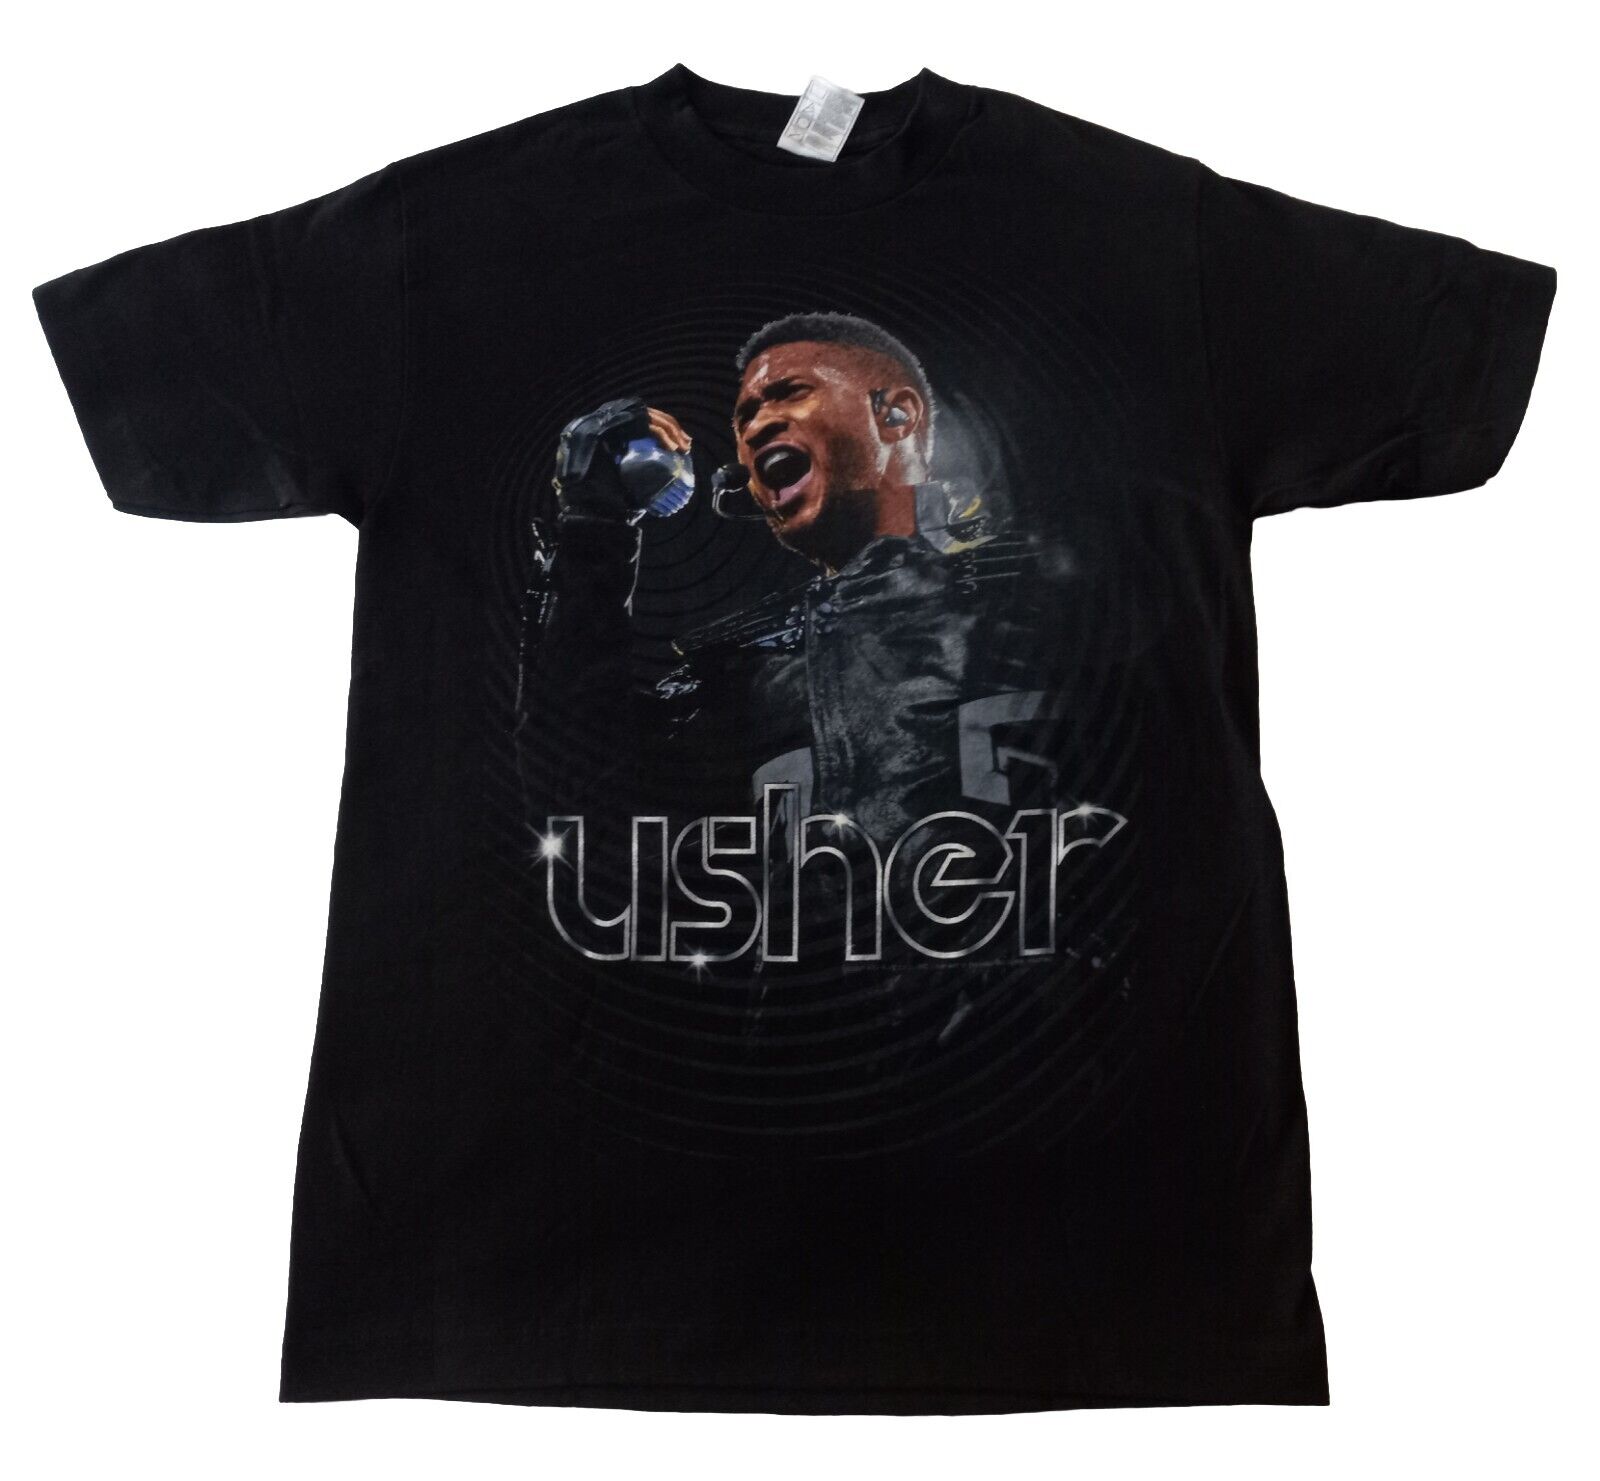 Nwot - Usher Microphone Hip-hop  Pop Music Concert T-shirt Size Small - Black